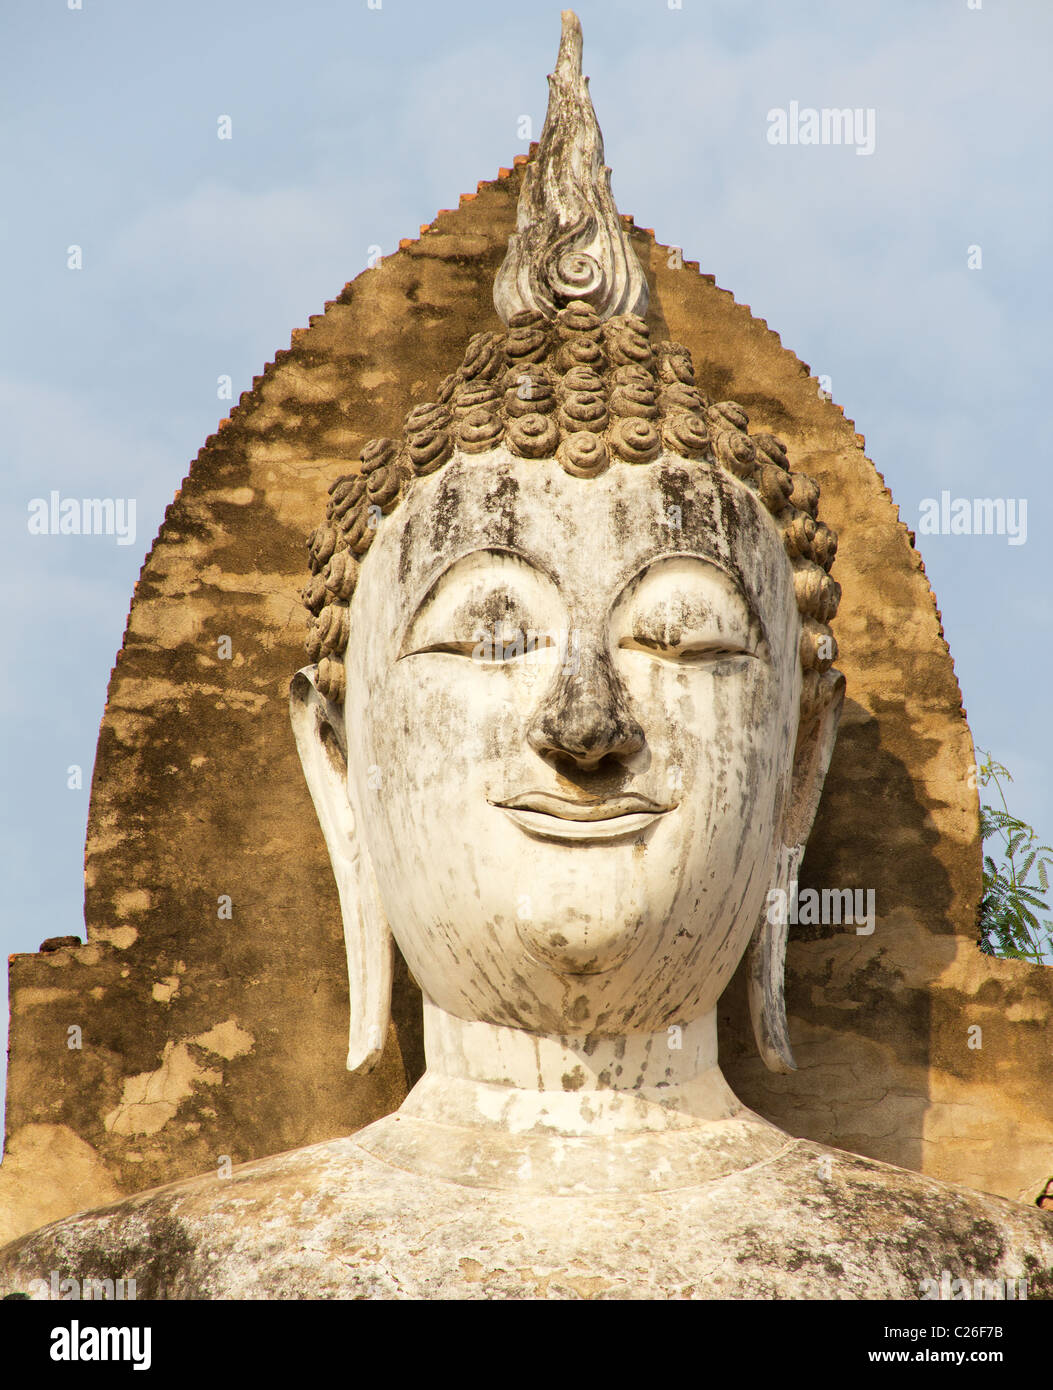 Face of Tall Standing Buddha Statue at Wat Mahathat, Sukothai Historical Park, Thailand Stock Photo